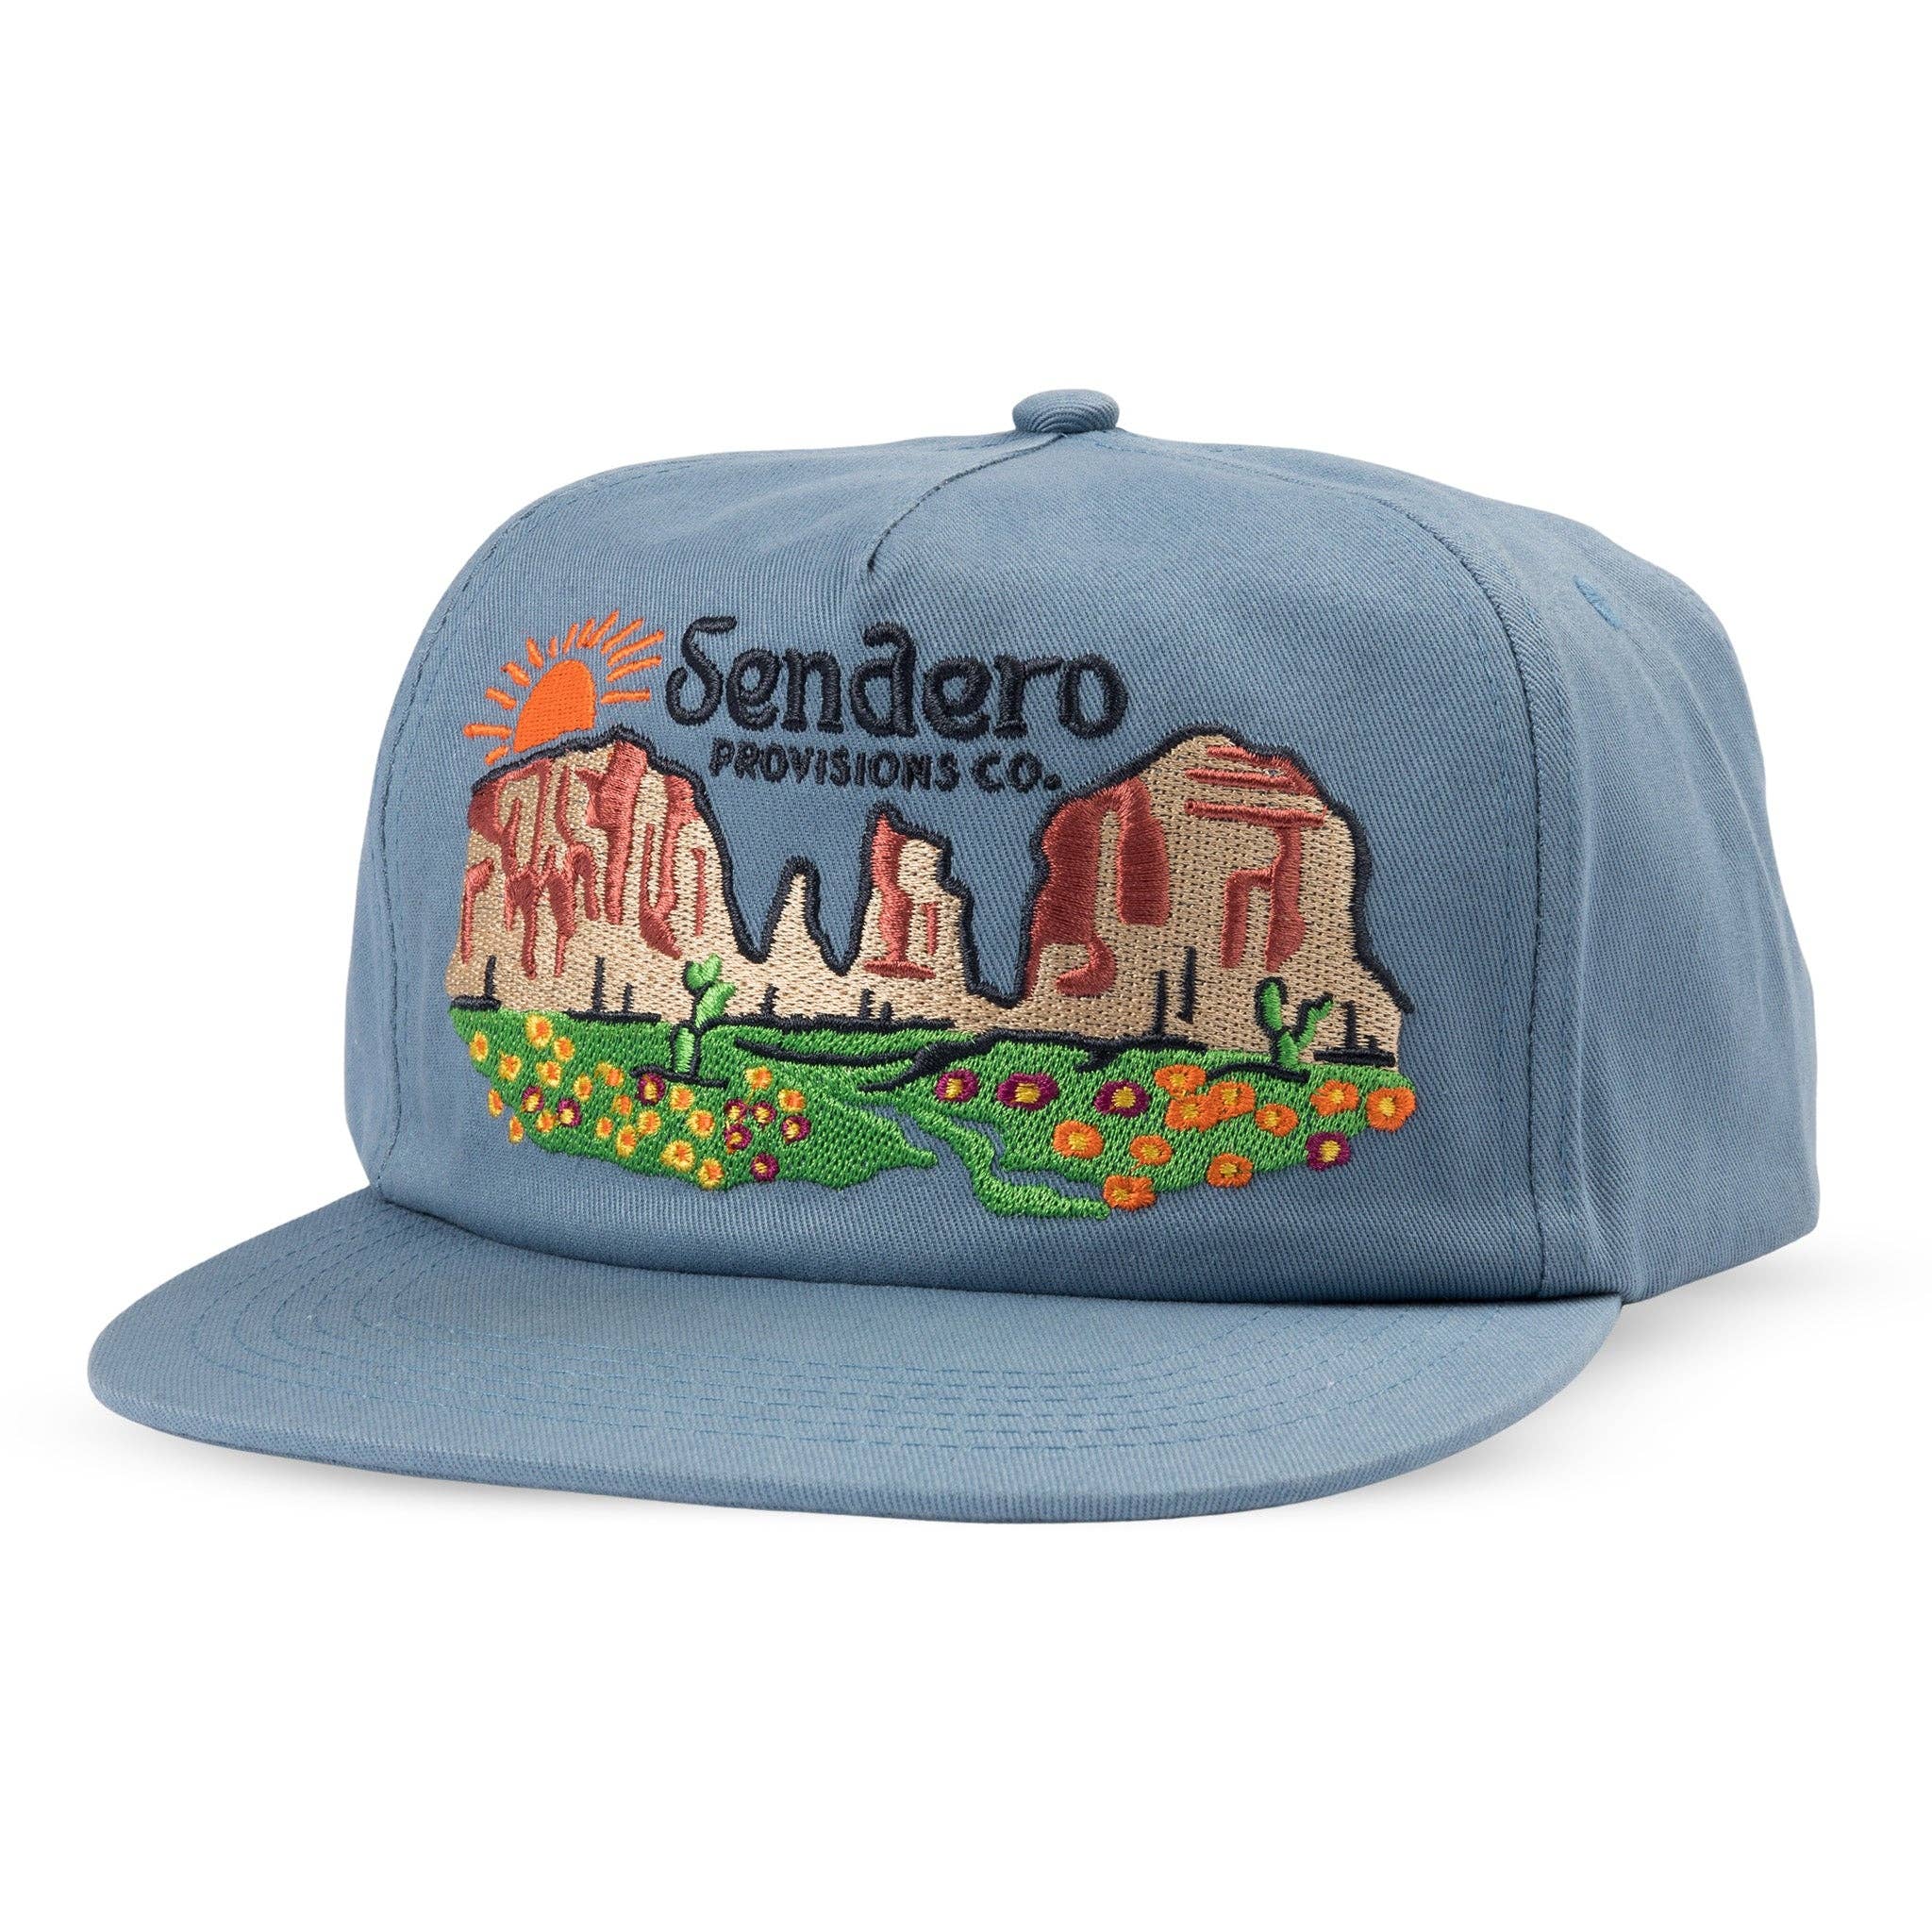 Get A Wholesale desert hat Order For Less 